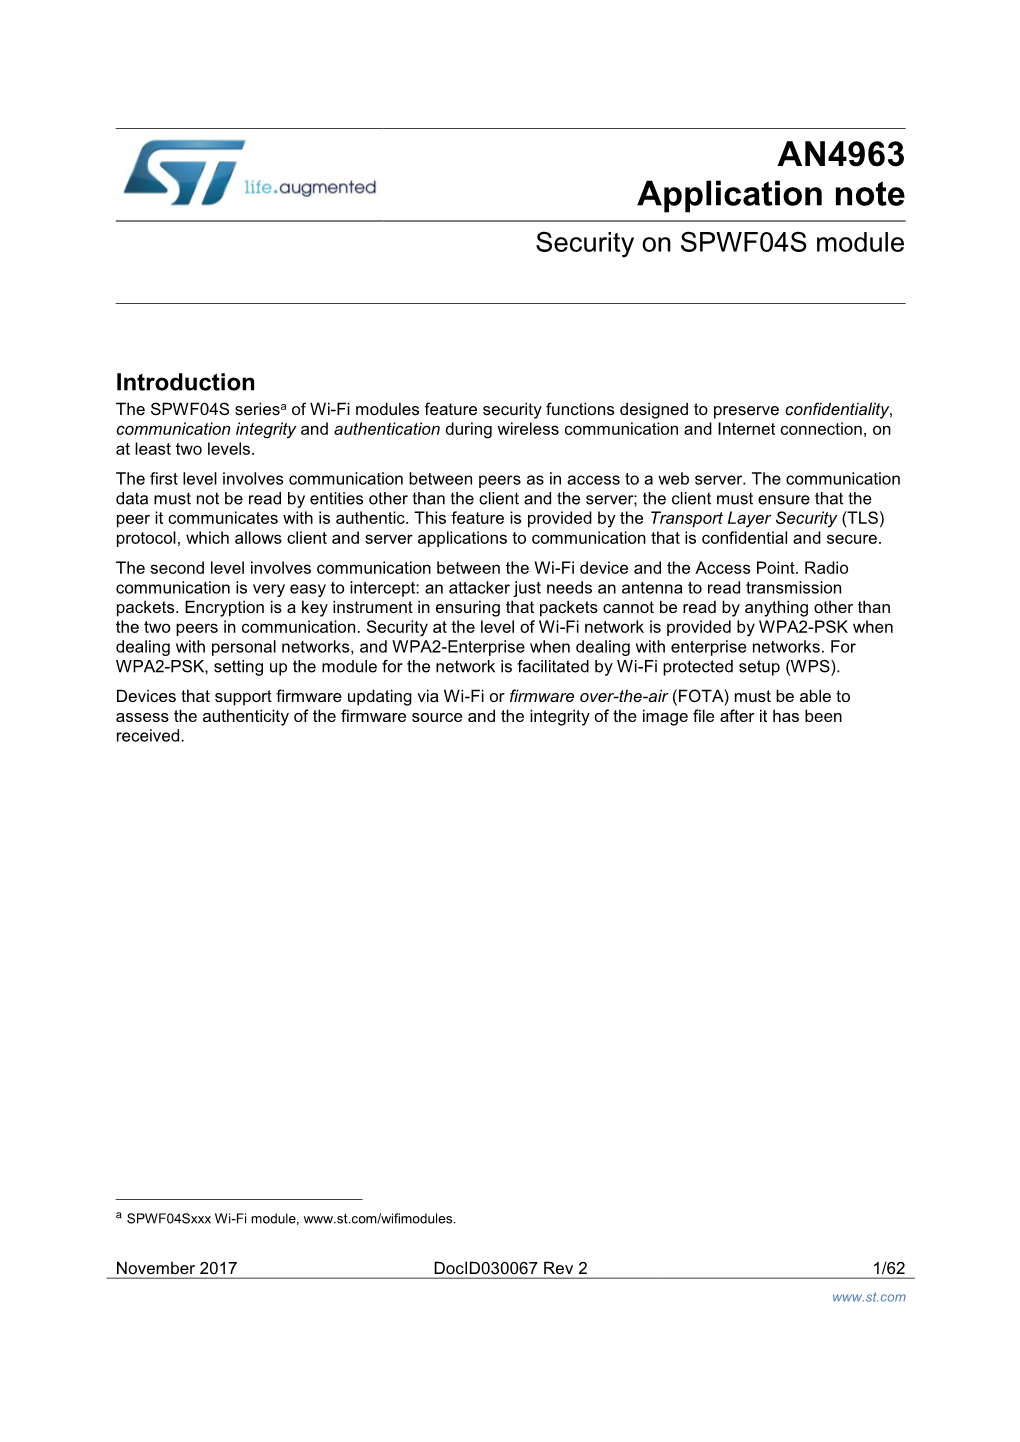 Security on SPWF04S Module